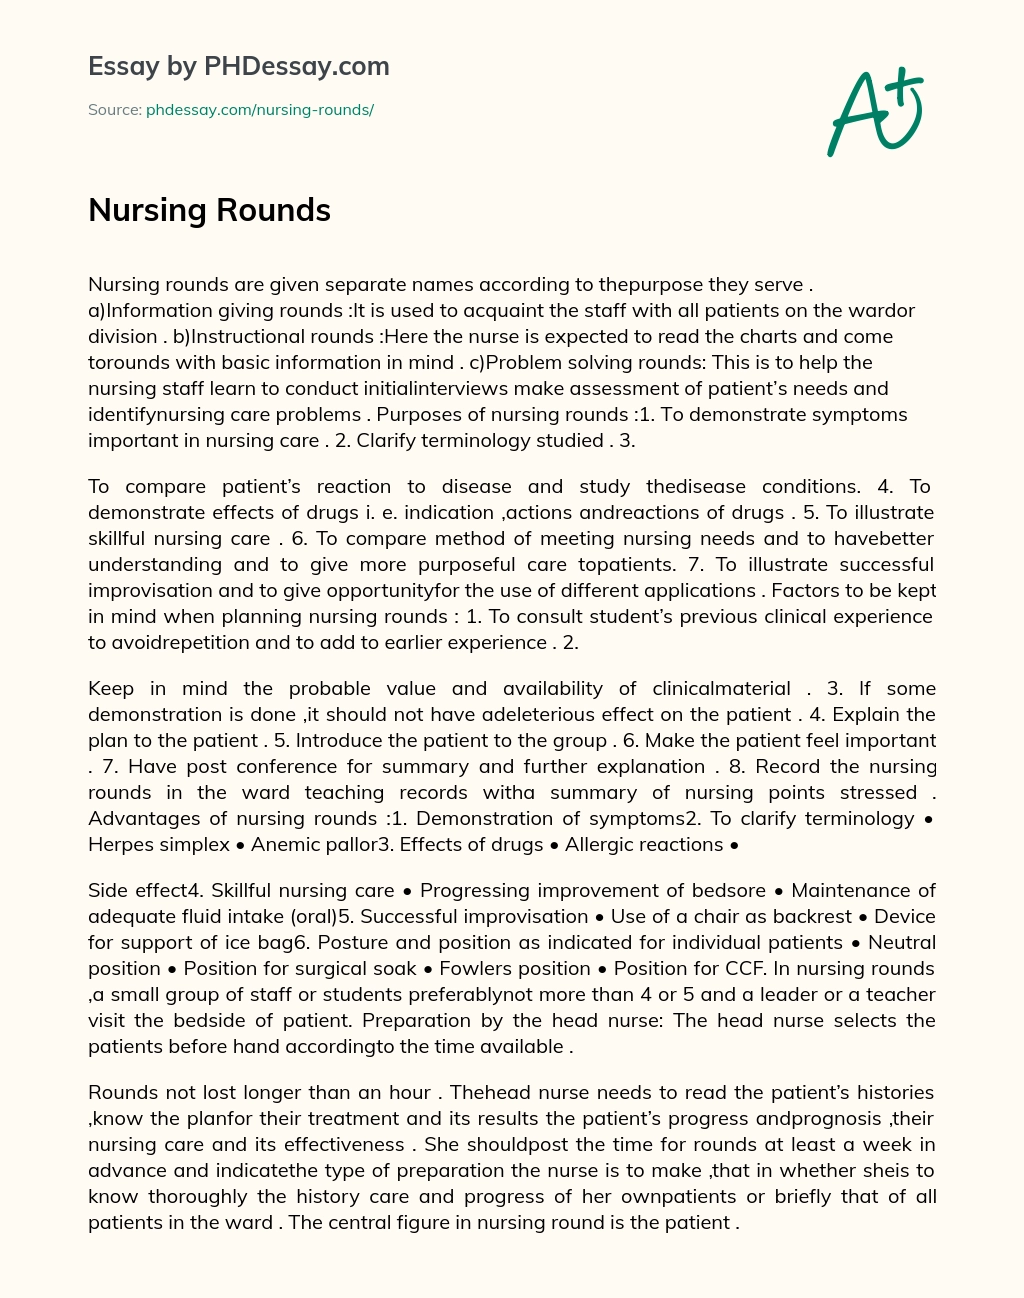 Nursing Rounds essay